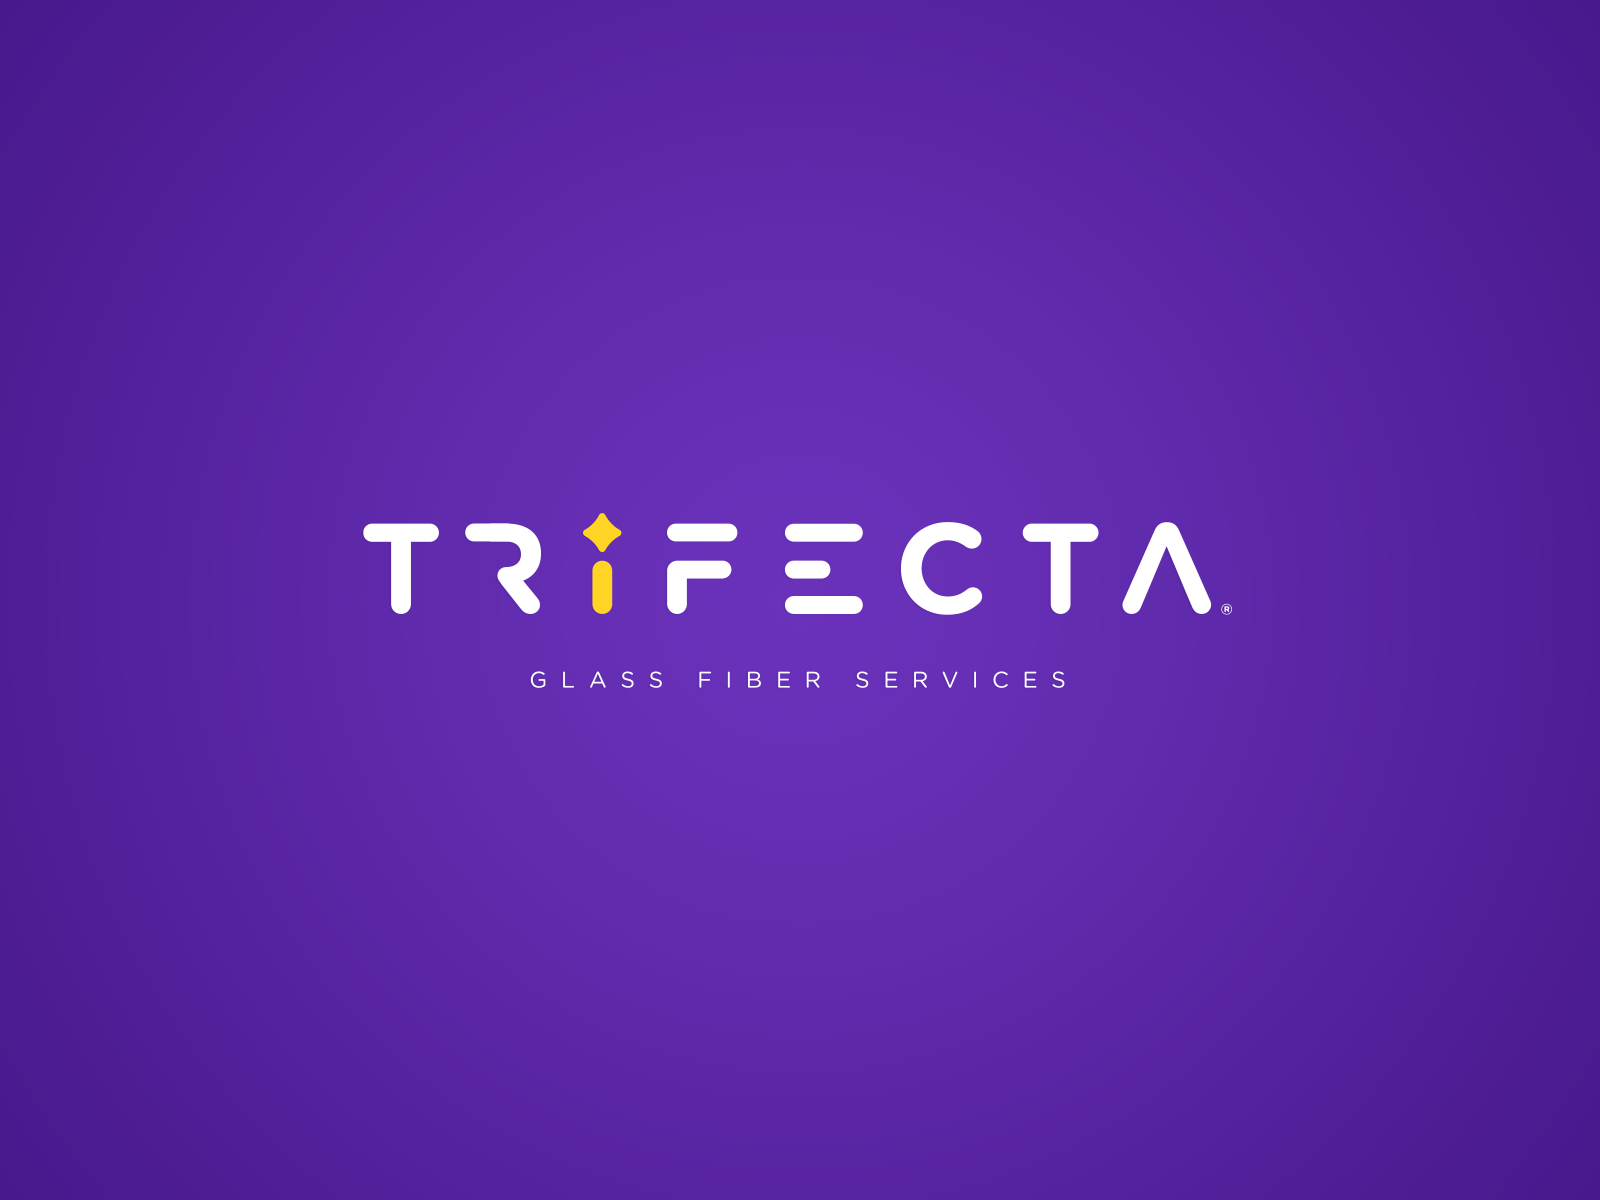 Logo for Trifecta by Lysimachos Maltoudoglou on Dribbble